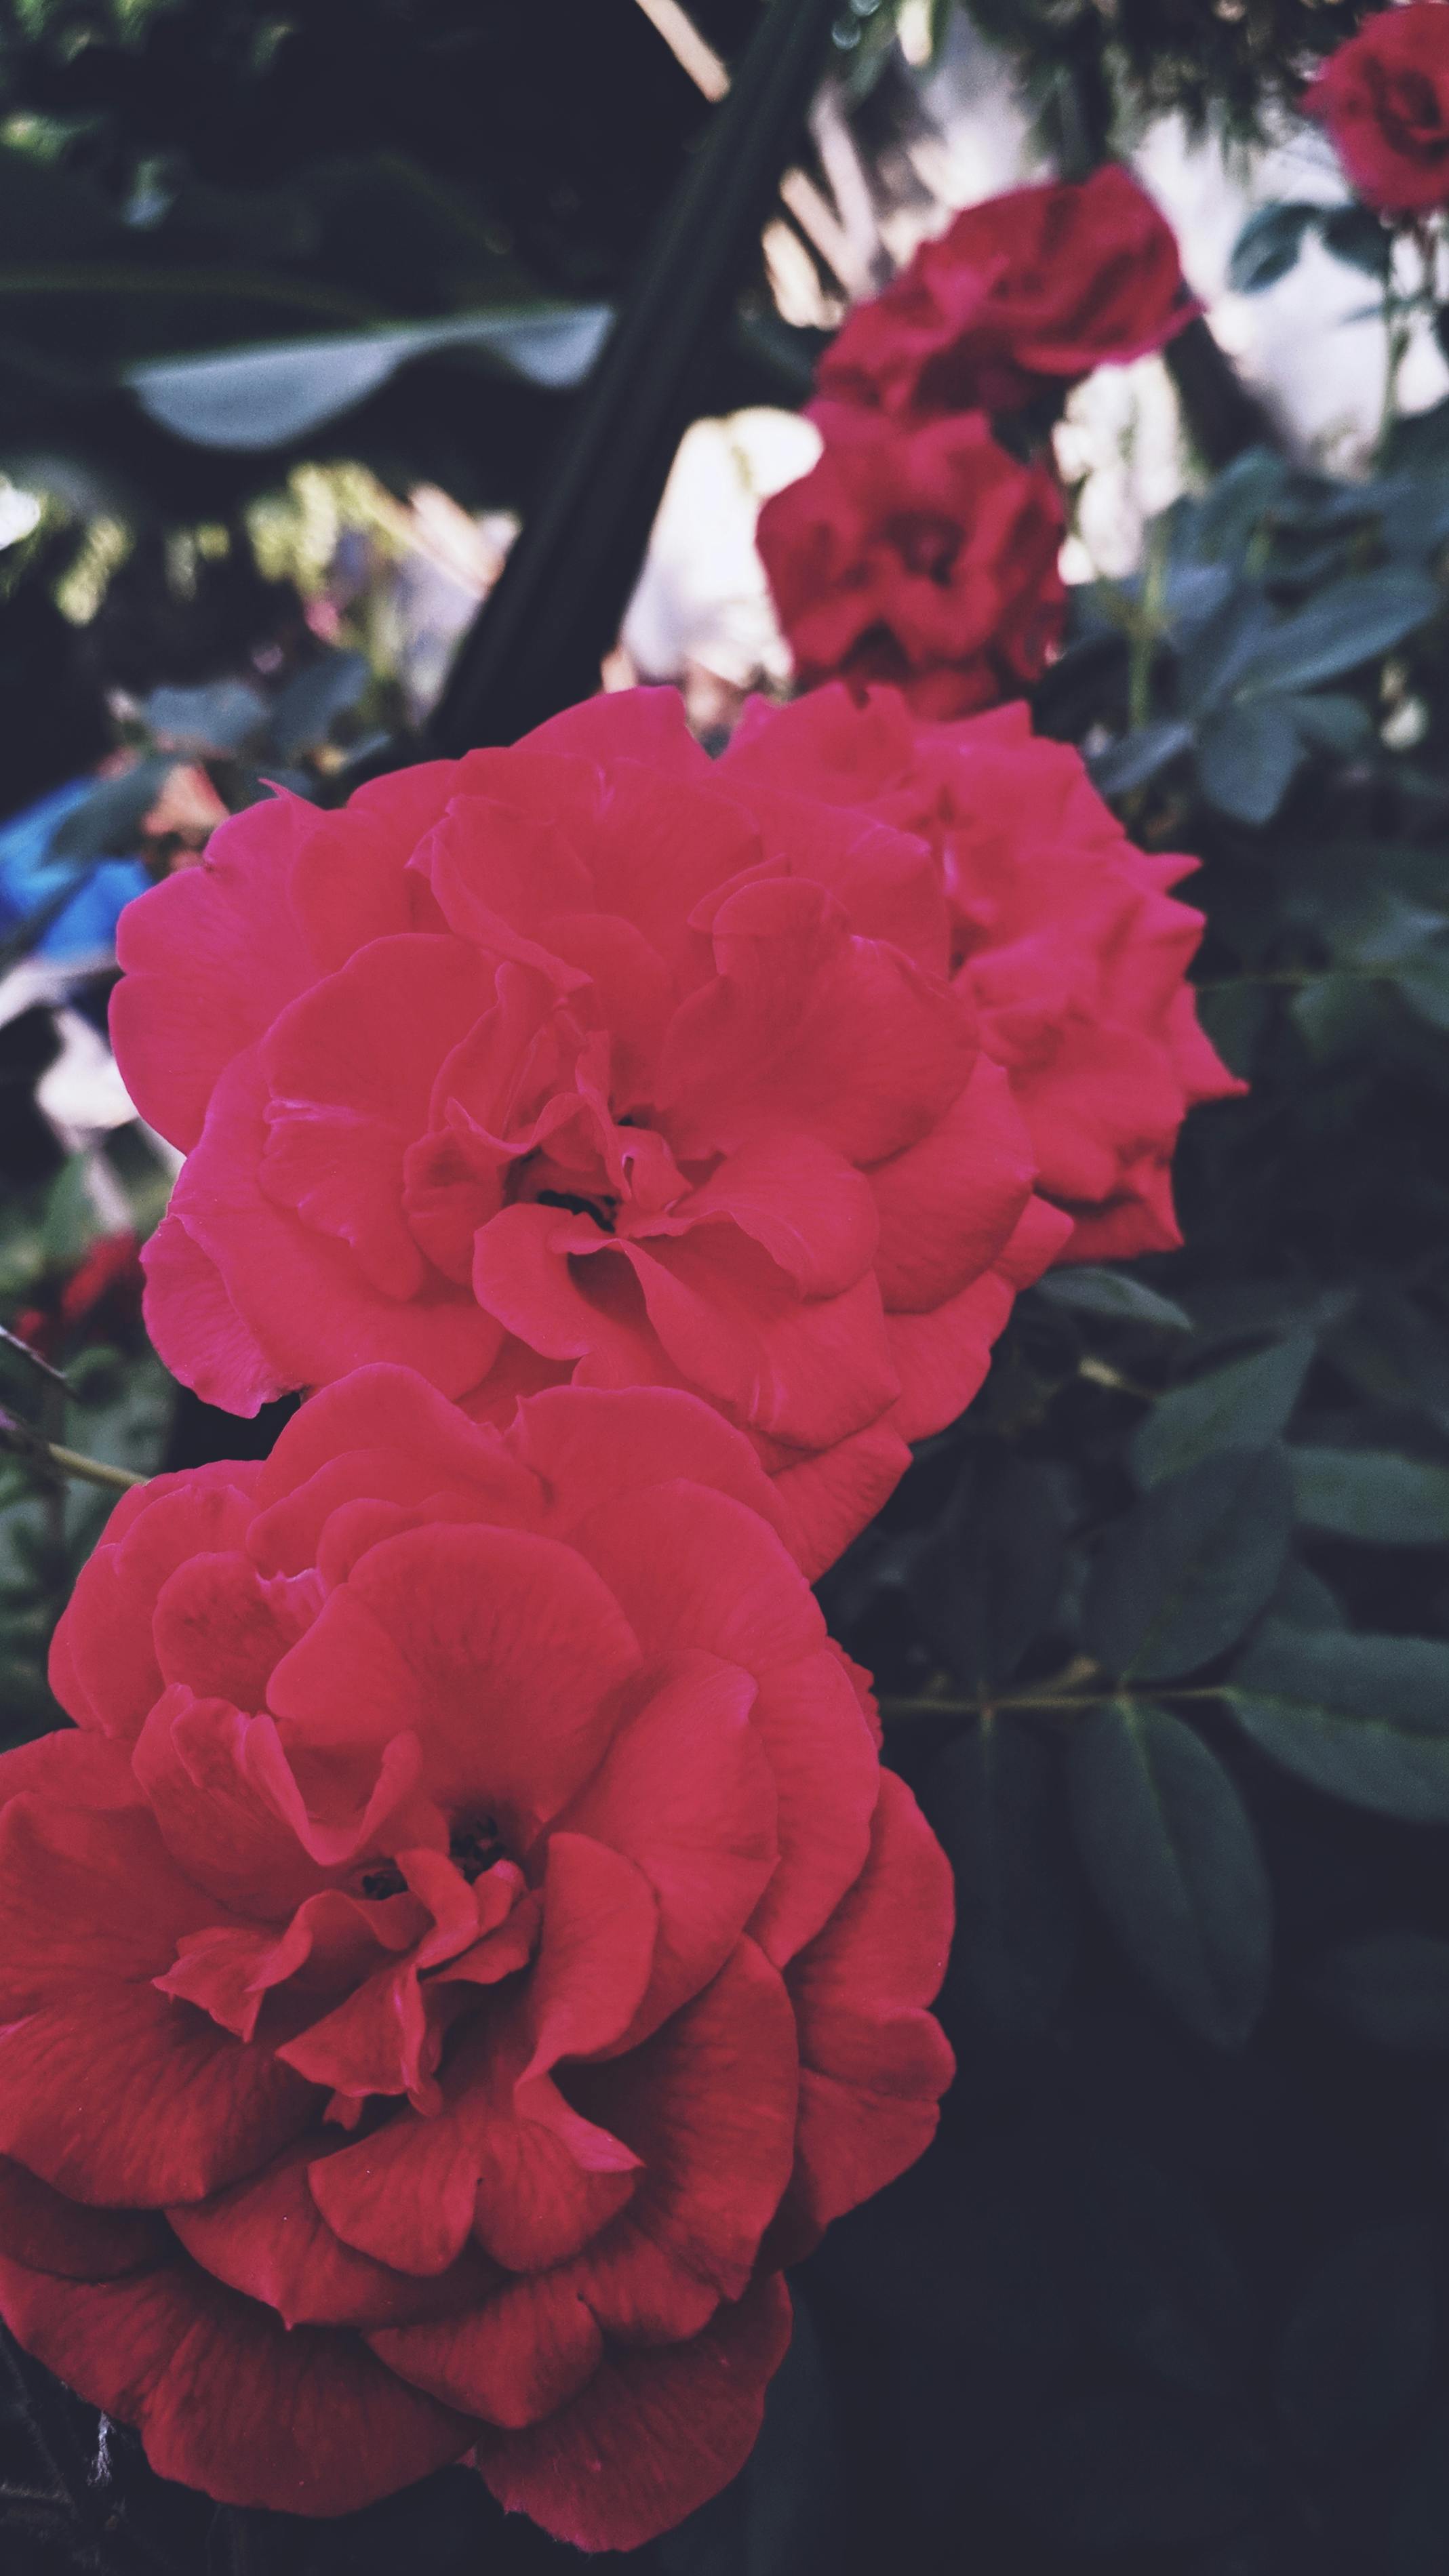 Free stock photo of Fresh rose, morning light, red roses